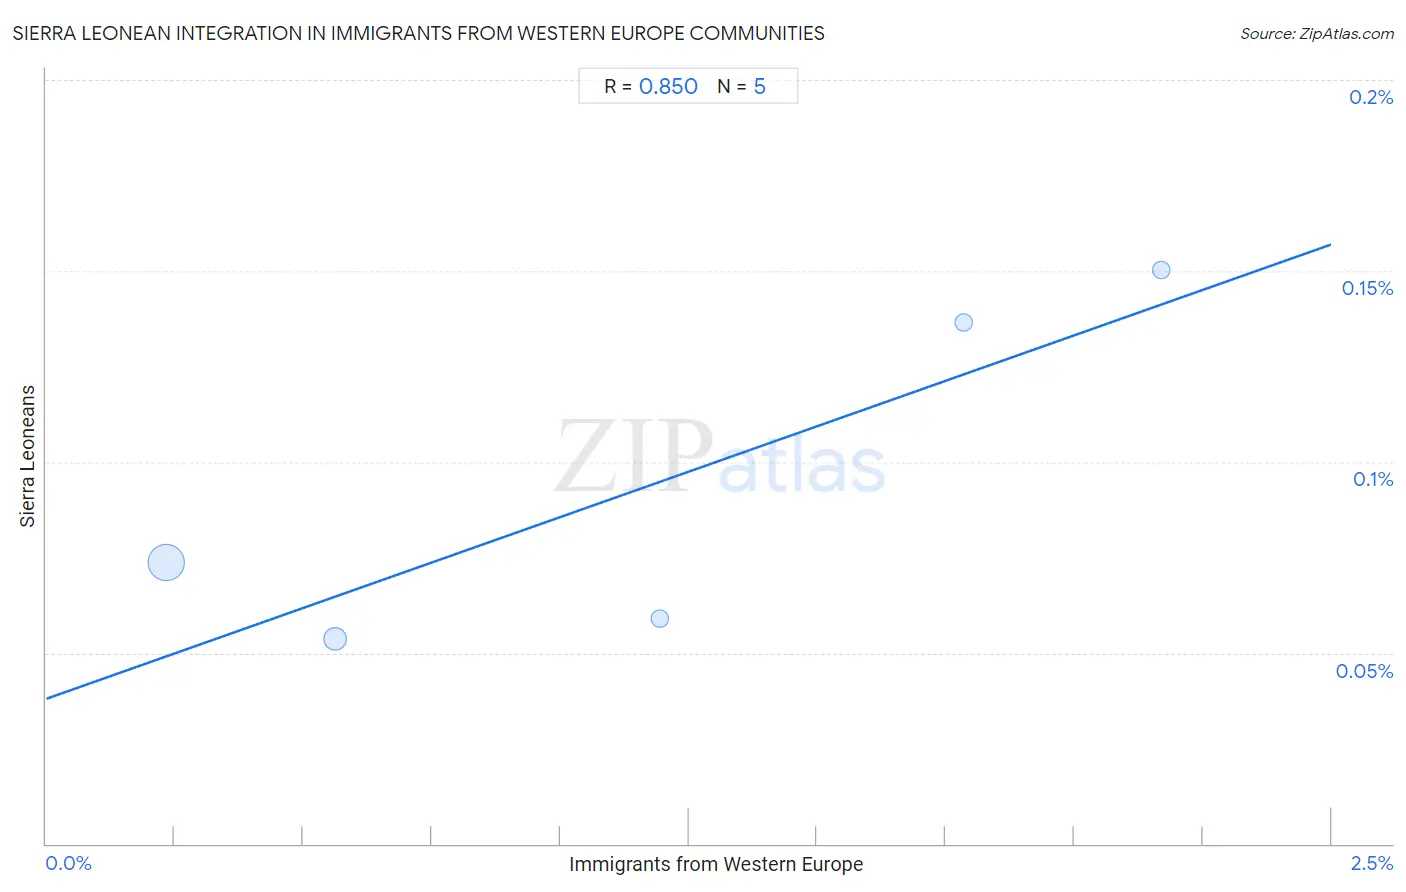 Immigrants from Western Europe Integration in Sierra Leonean Communities